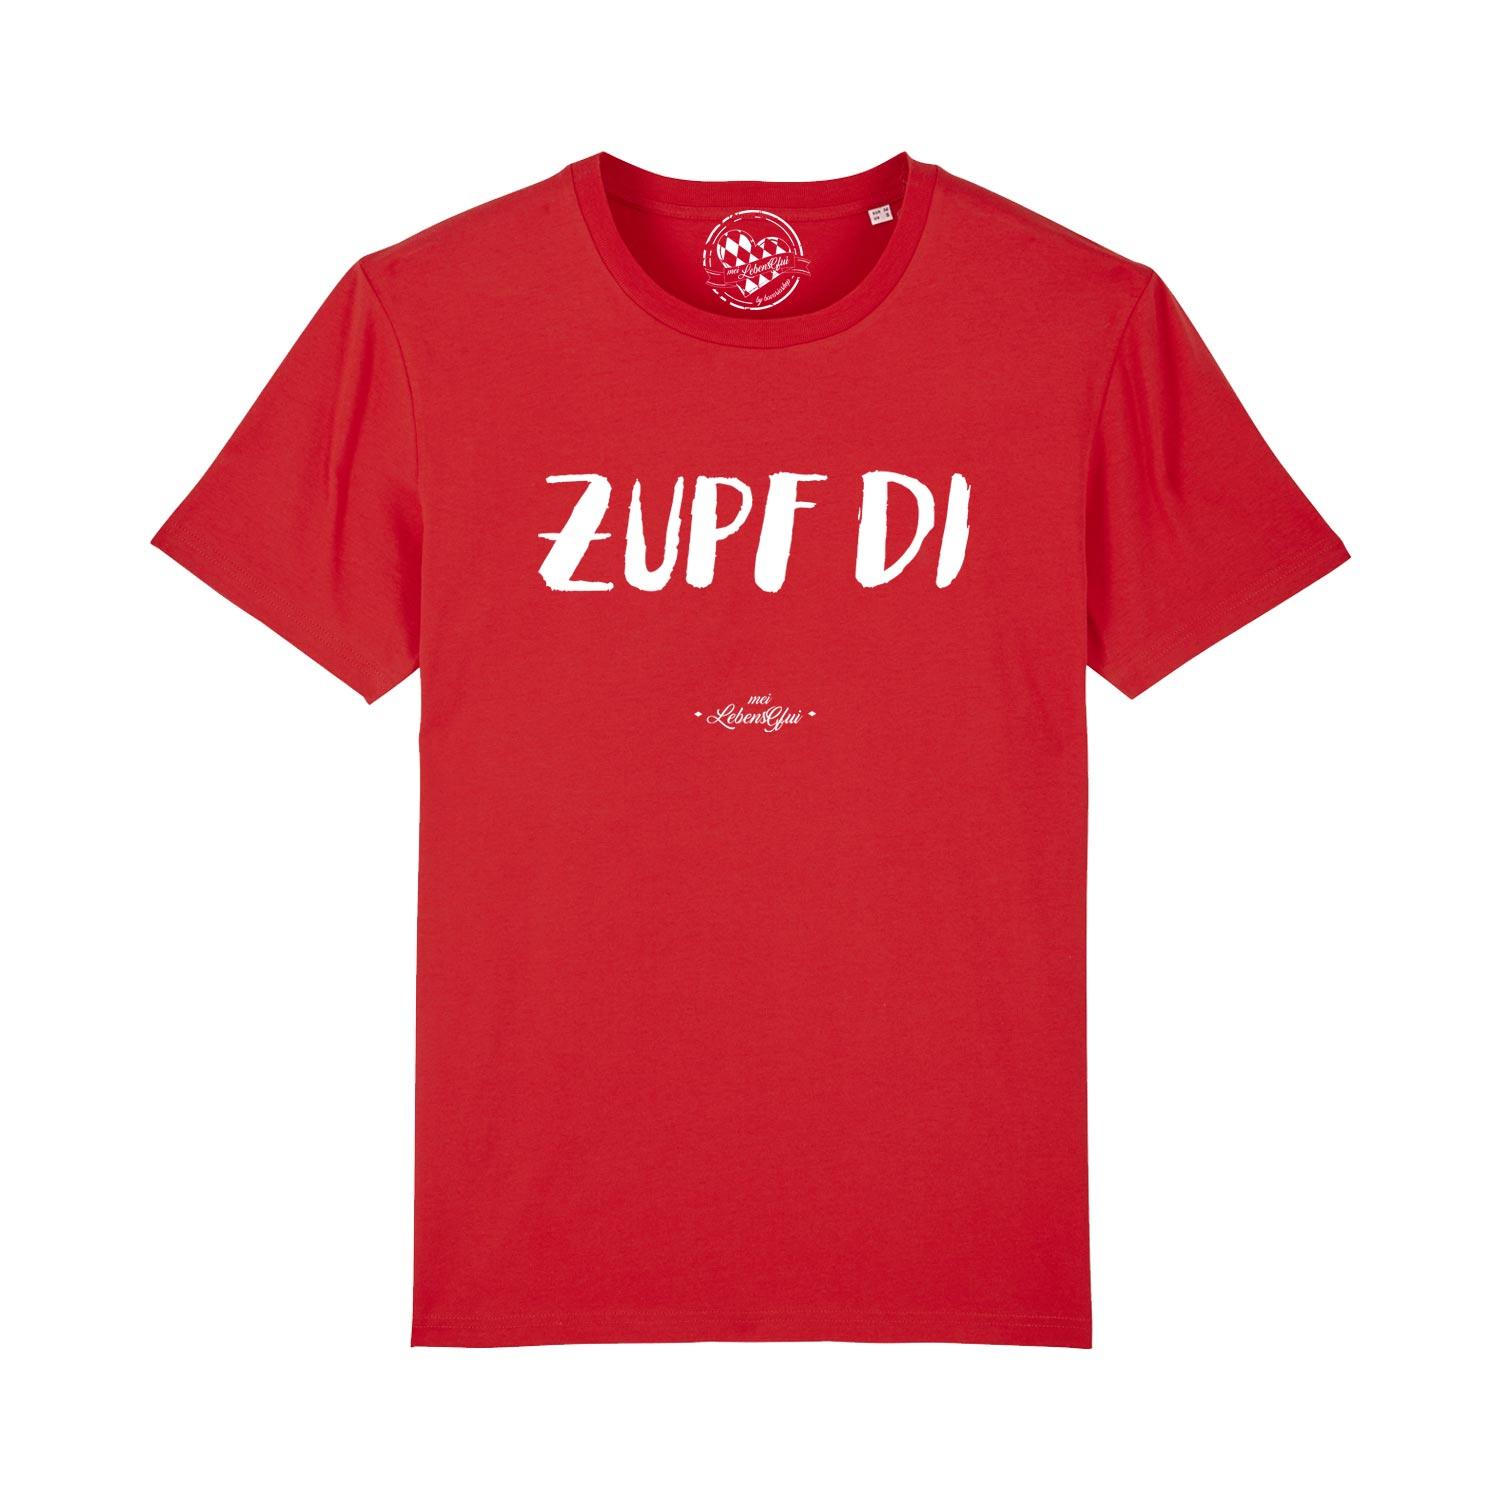 Herren T-Shirt "Zupf di" - bavariashop - mei LebensGfui